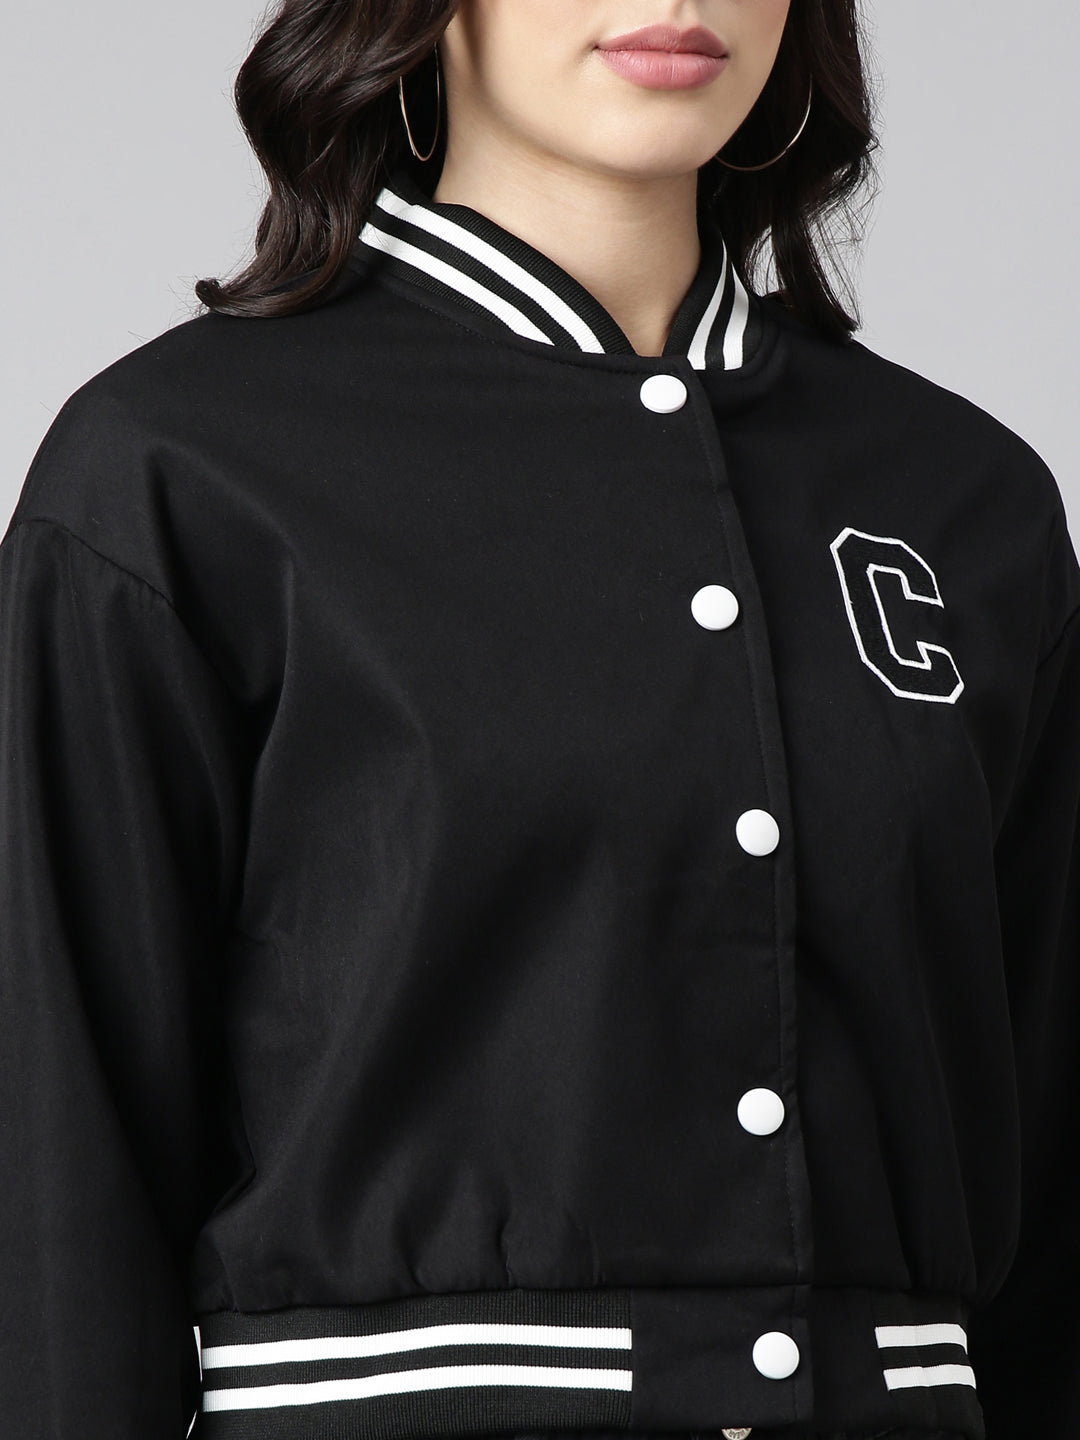 Women Solid Black Crop Drop Shoulder Varsity Jacket